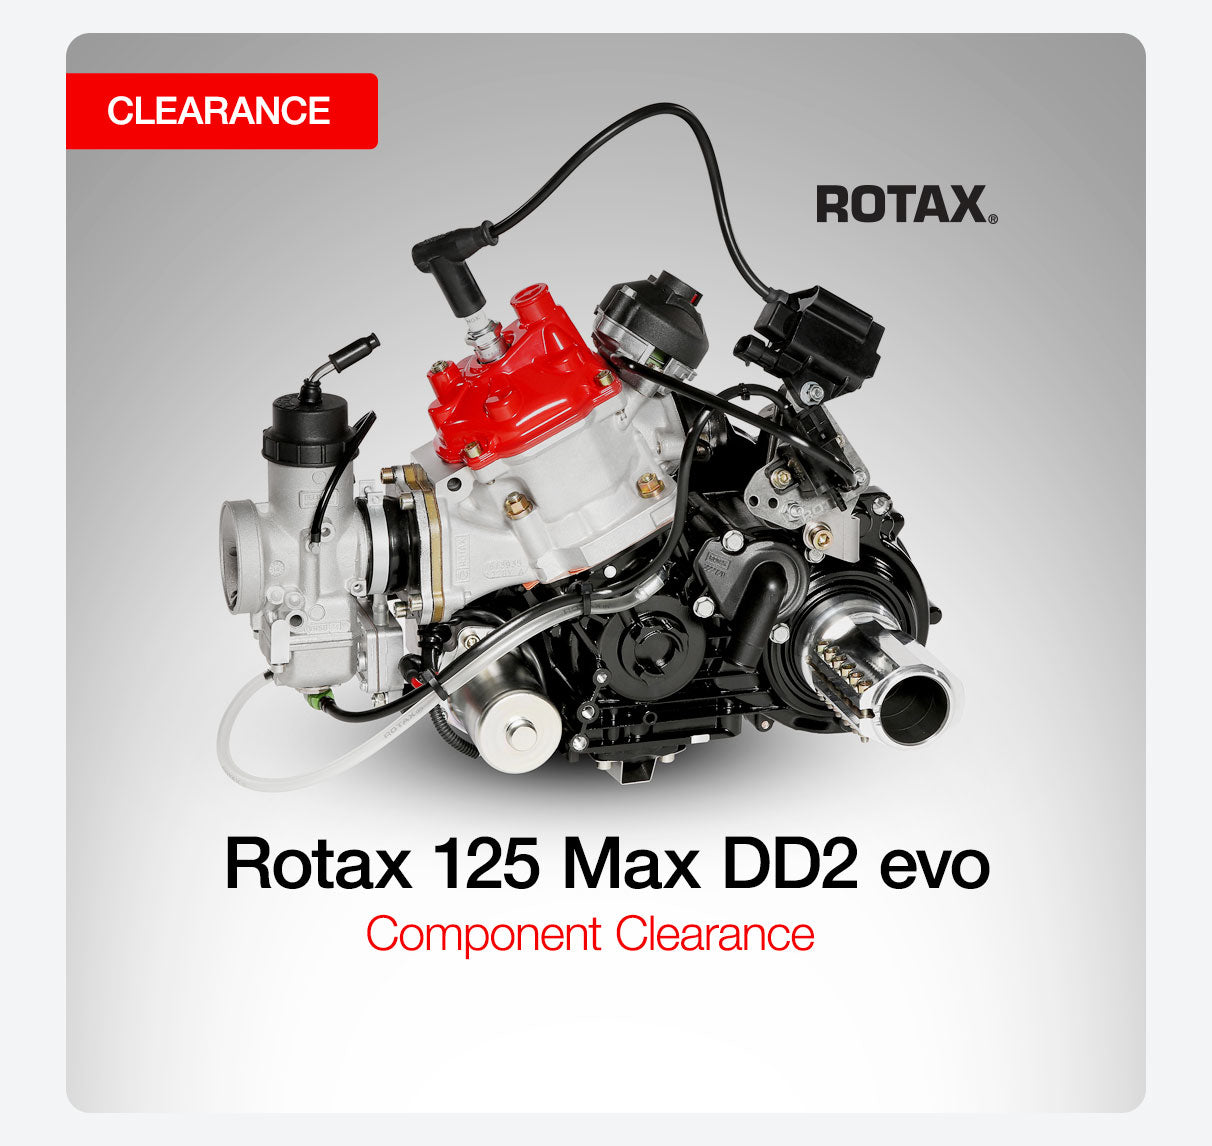 Cheap Go Kart Engine Parts | Rotax 125 Max DD2 evo Kart Engine | Components clearance